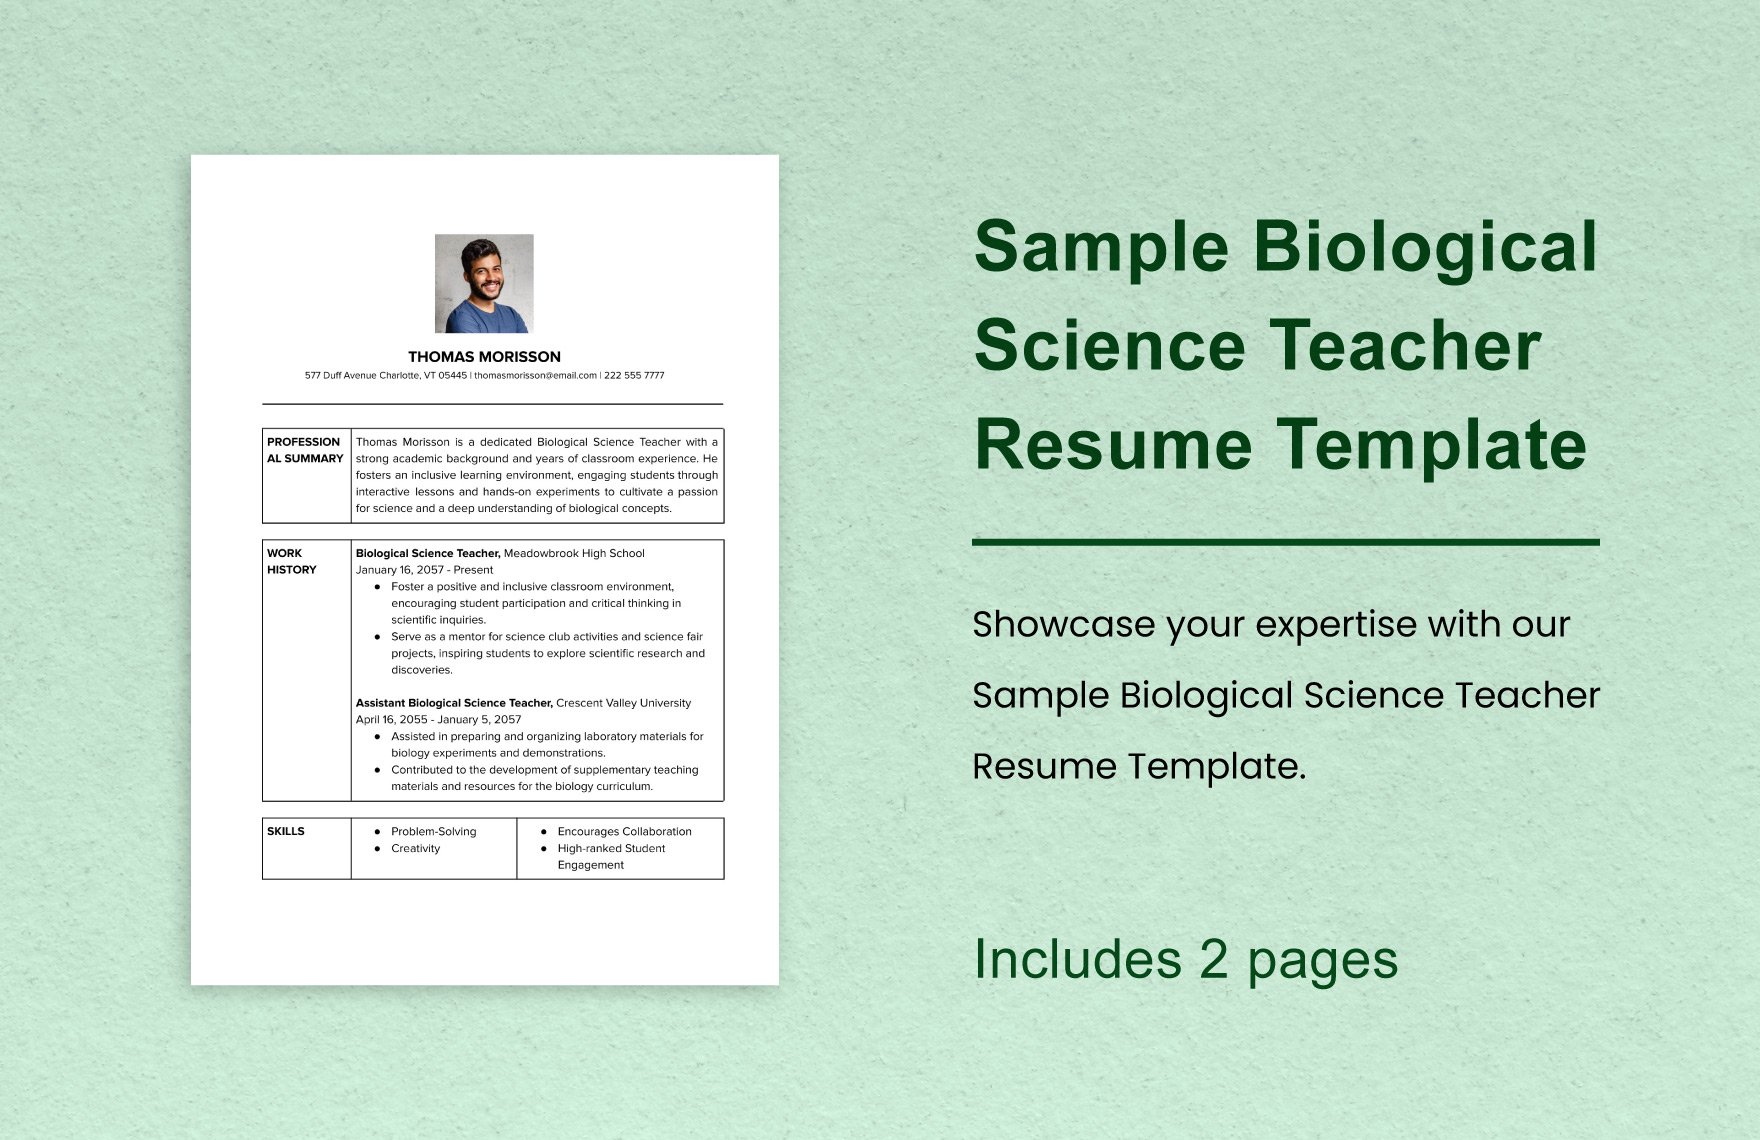 Sample Biological Science Teacher Resume Template